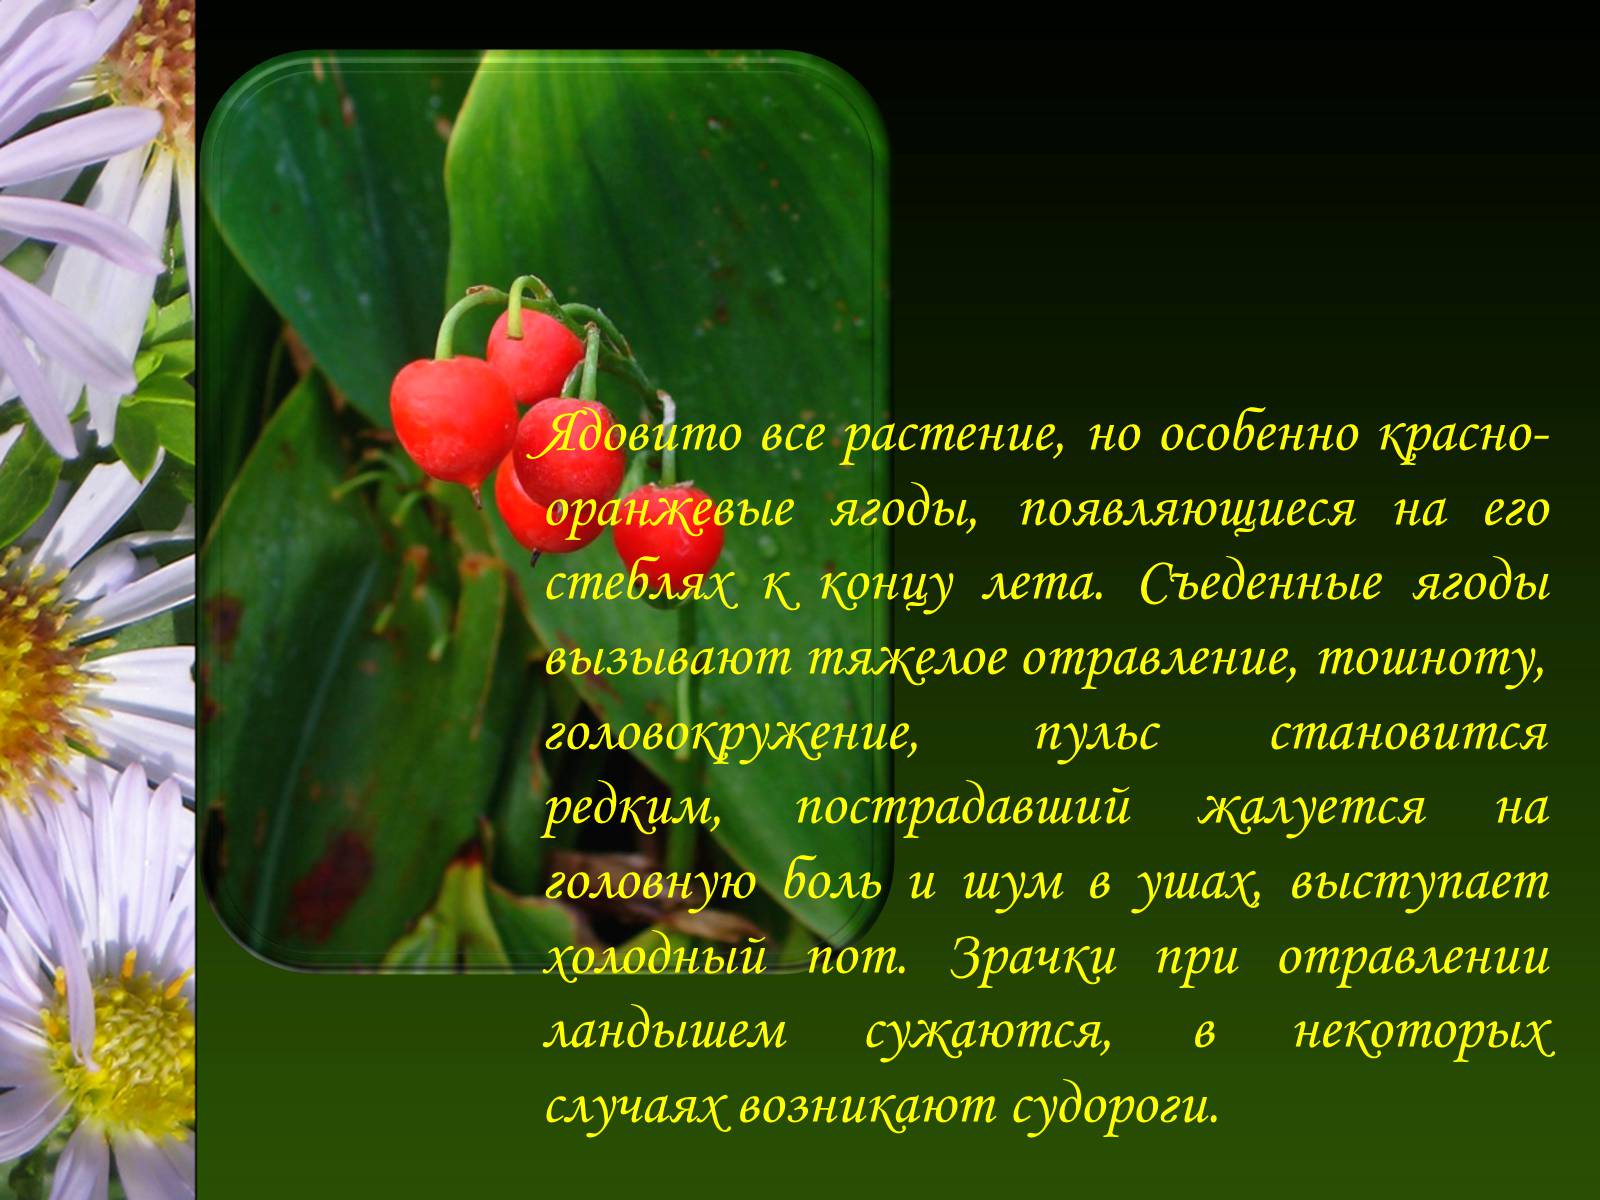 Презентація на тему «Ядовитые растения Украины» - Слайд #11